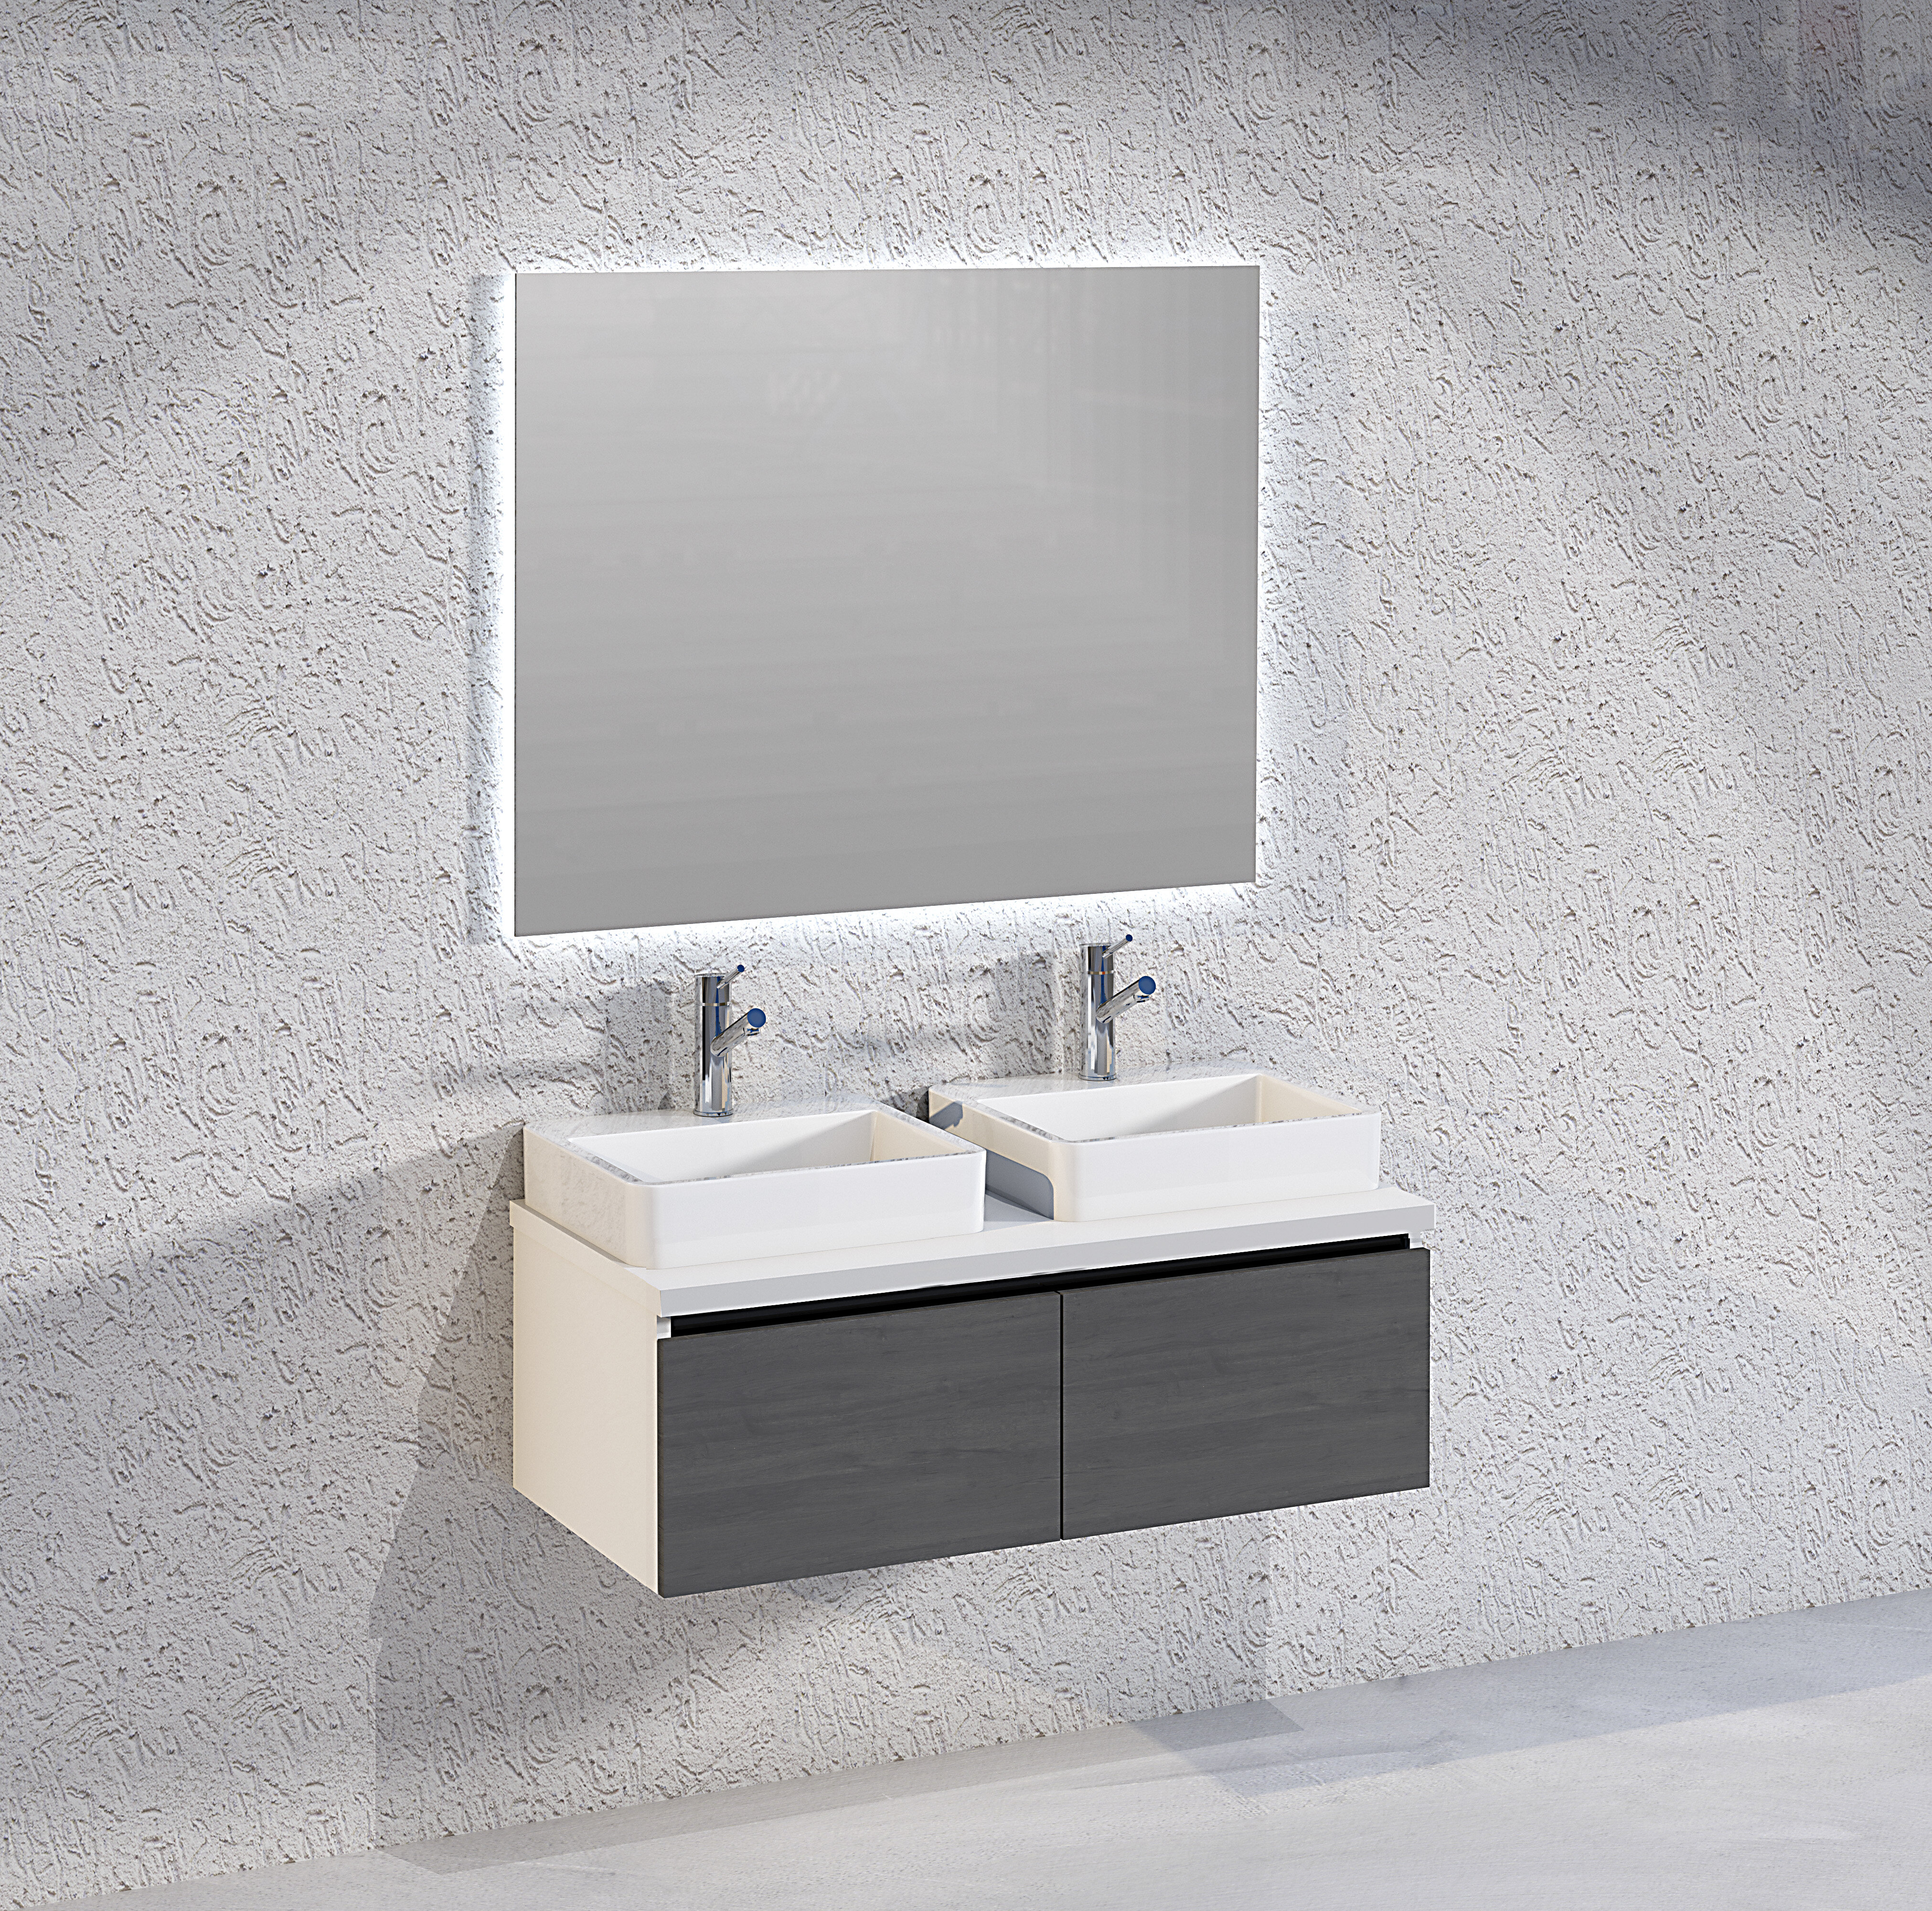 Brayden Studio Rebello Bathroom 1000mm Wall Hung Double Vanity Unit Wayfaircouk